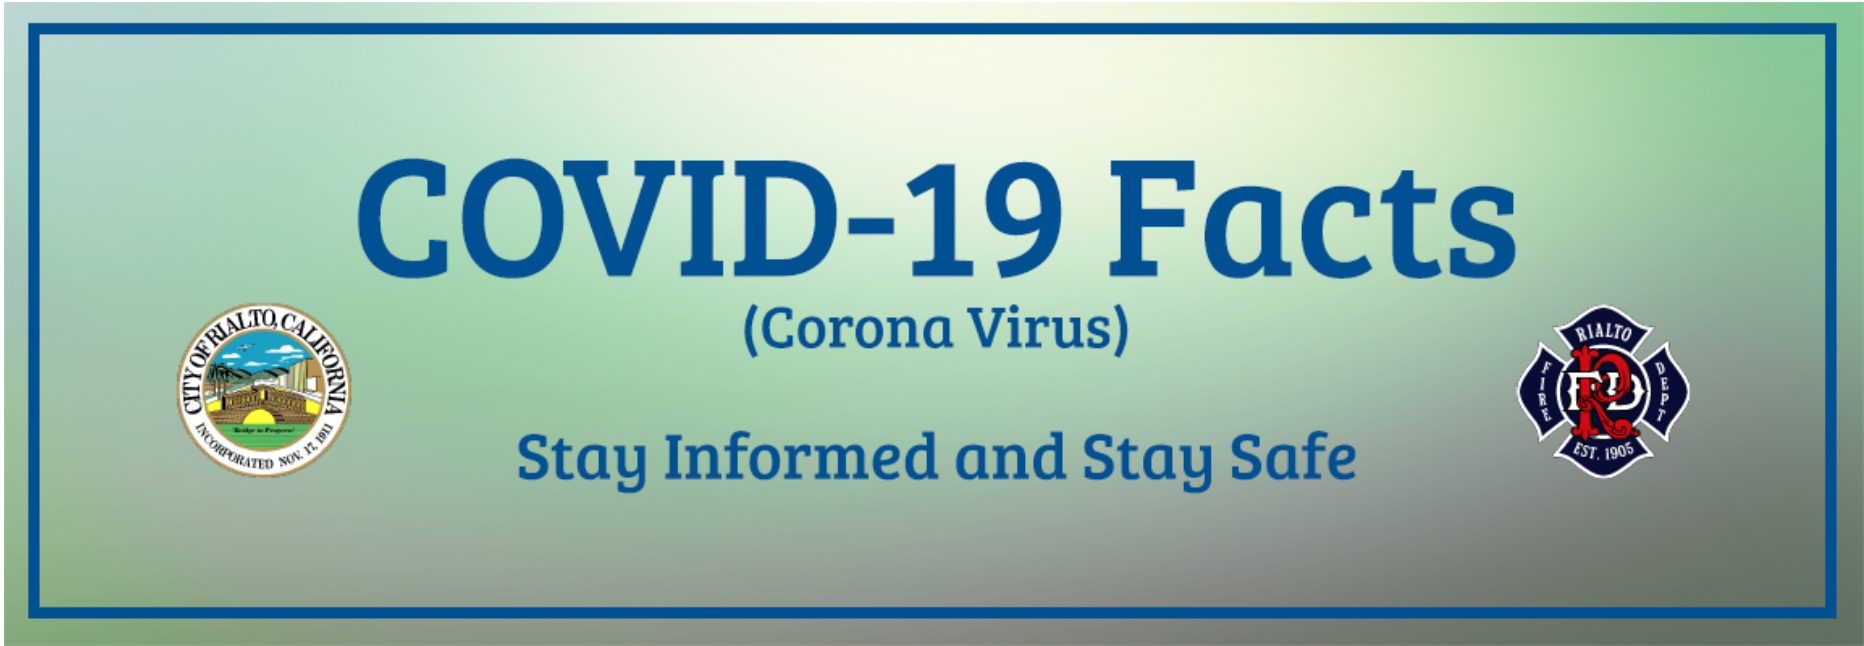 COVID-19 Corona Virus Facts